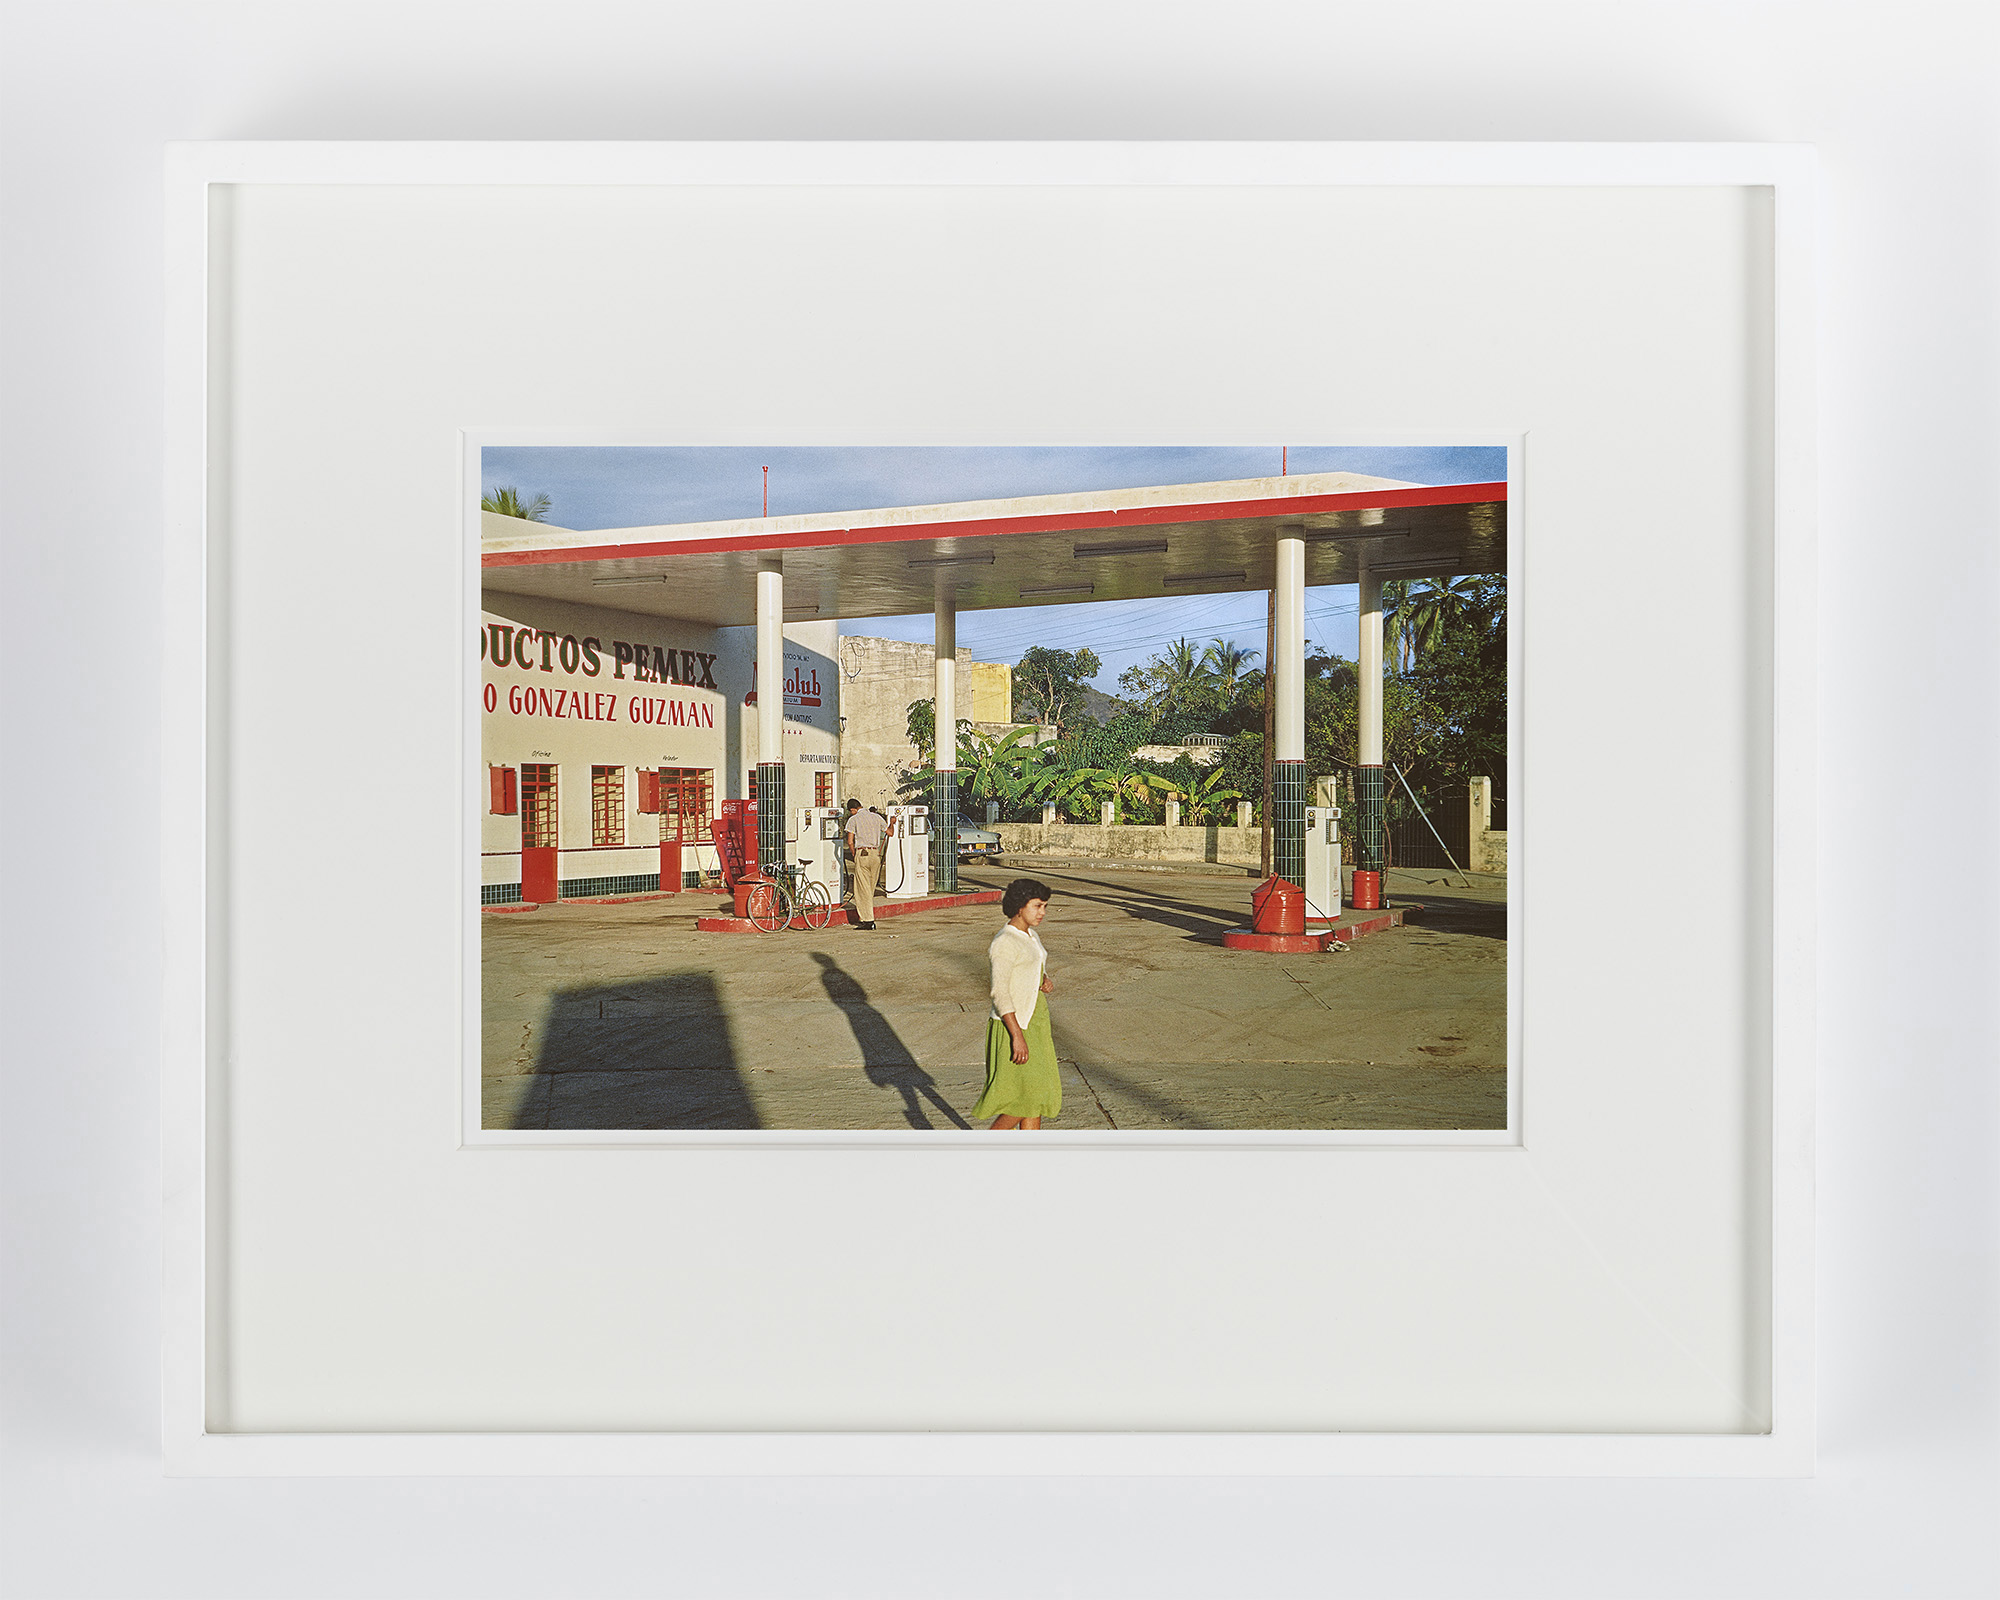 Paul Outerbridge
Gas Station, Mazatlán, Mexico, c.1950
CarbroArt™ digital pigment print process, by Steidl in Göttingen, 2018
Arches 88, 300 gsm 100% cotton acid-free paper
16“ x 20“ framed Edition of 25